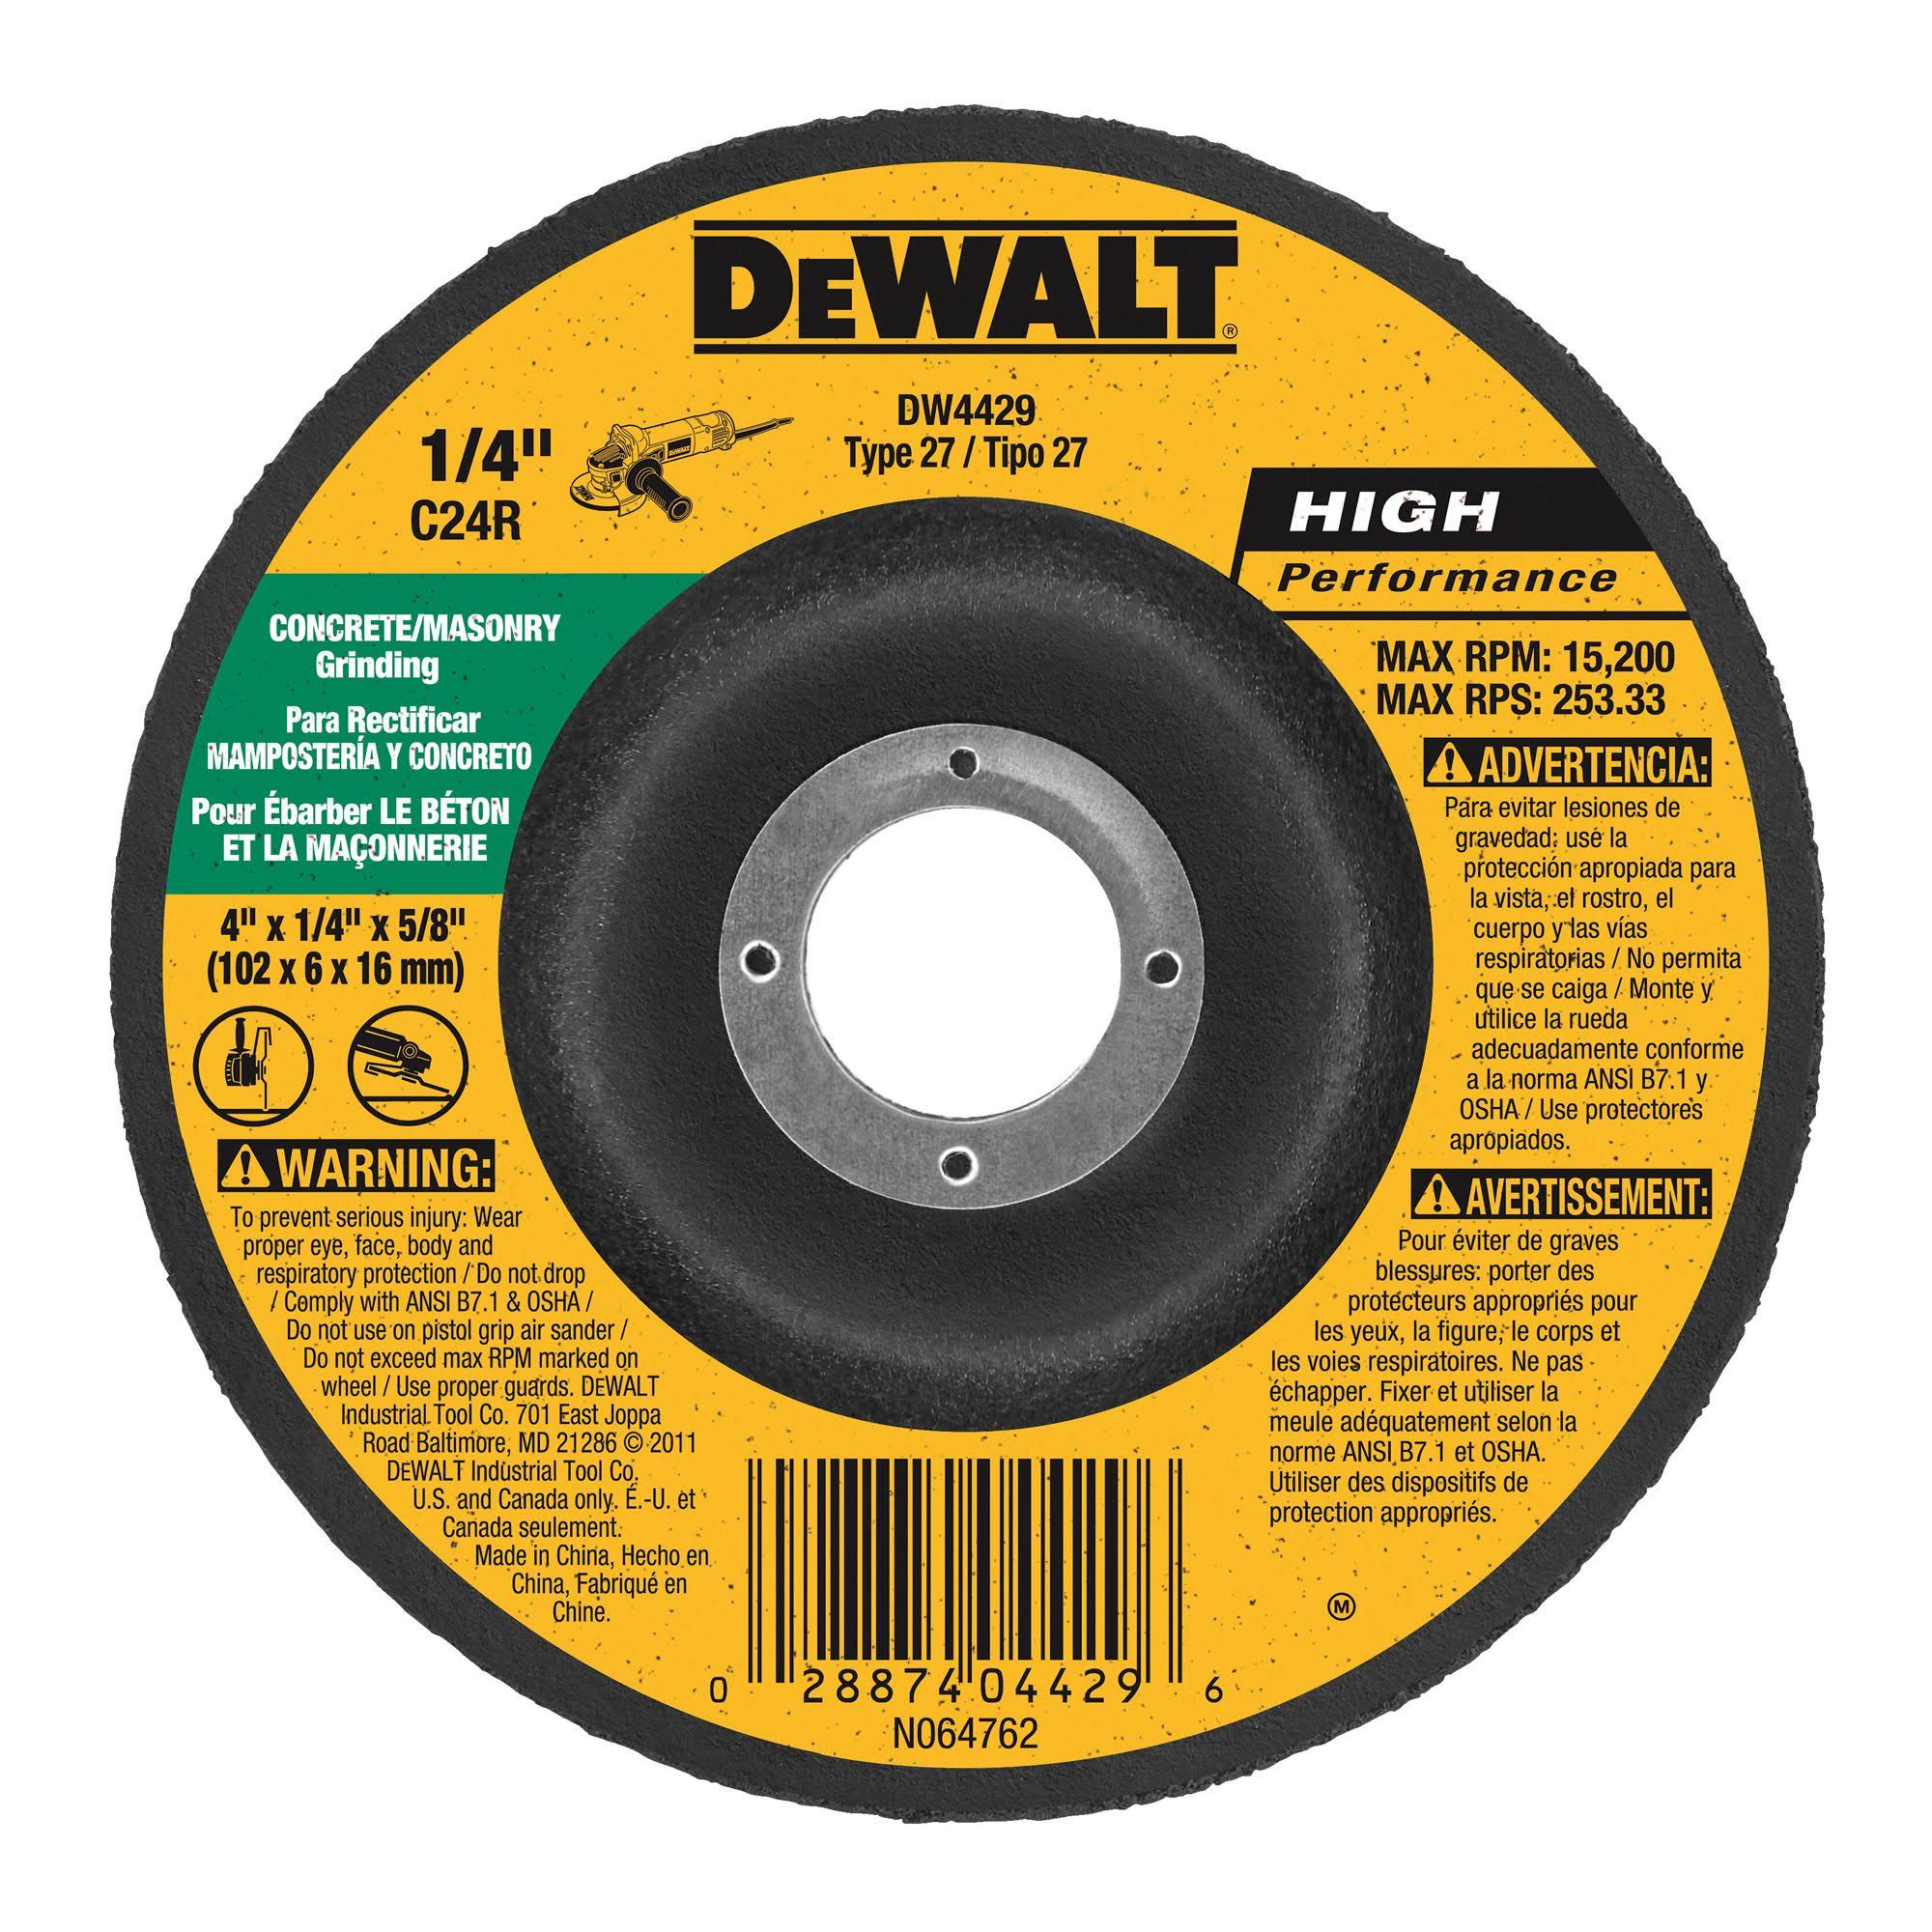 DEWALT Concrete and Masonry Grinding Wheel - 4-1/2" x 1/4" x 7/8"